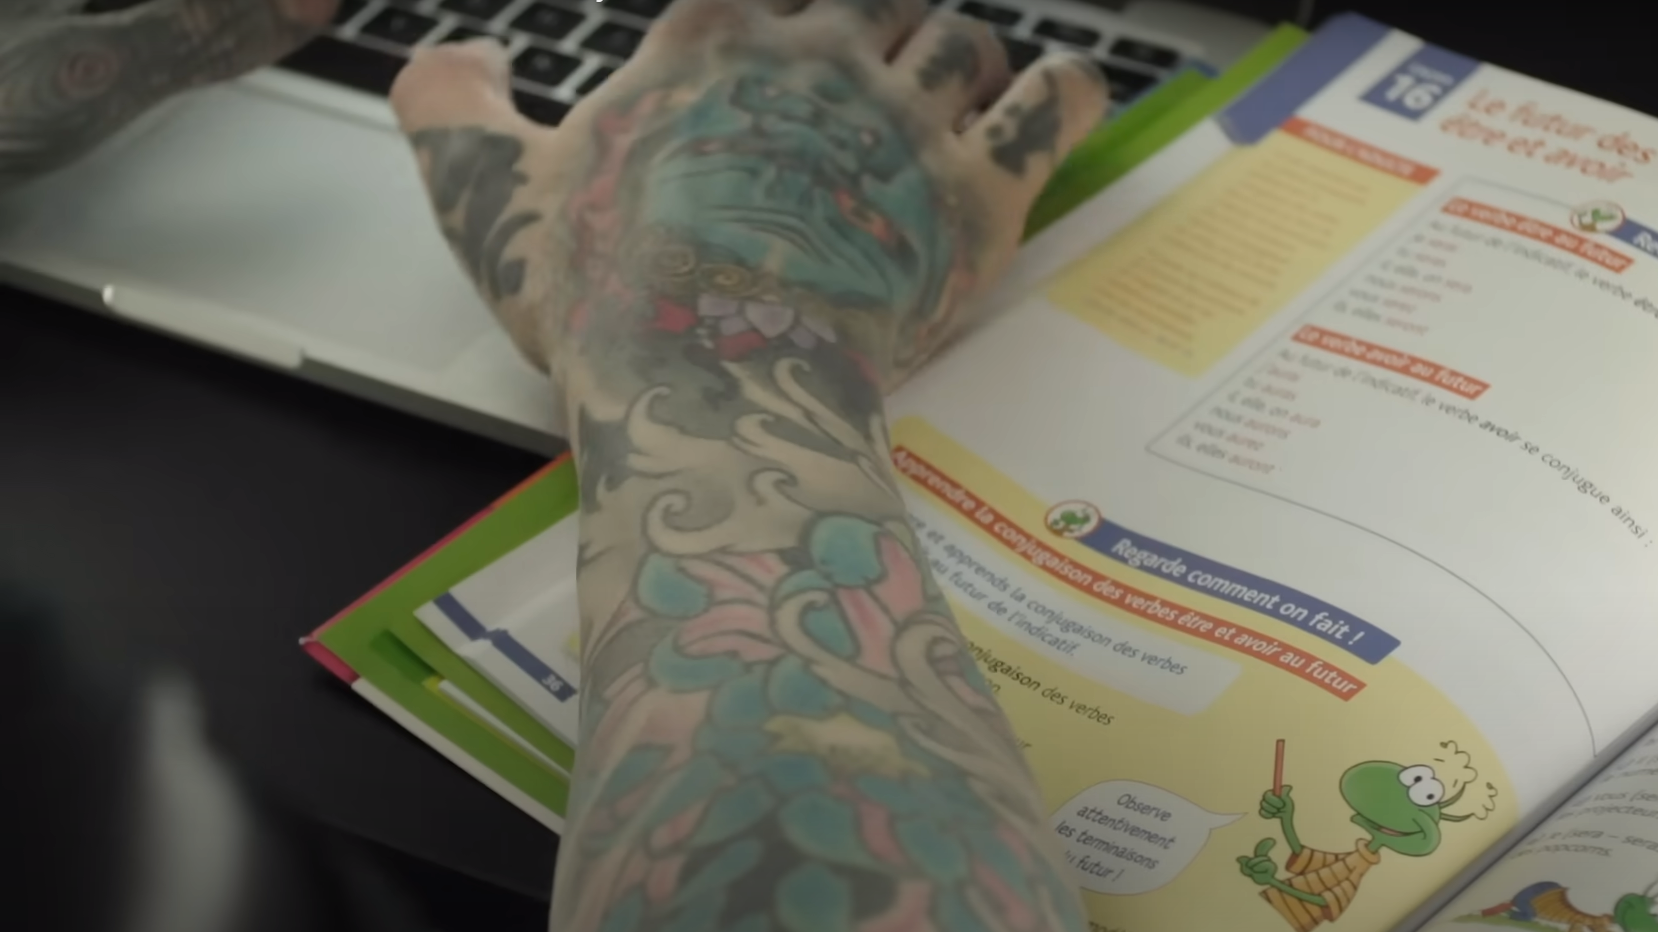 Reasons Teachers Should Avoid Getting Tattoos